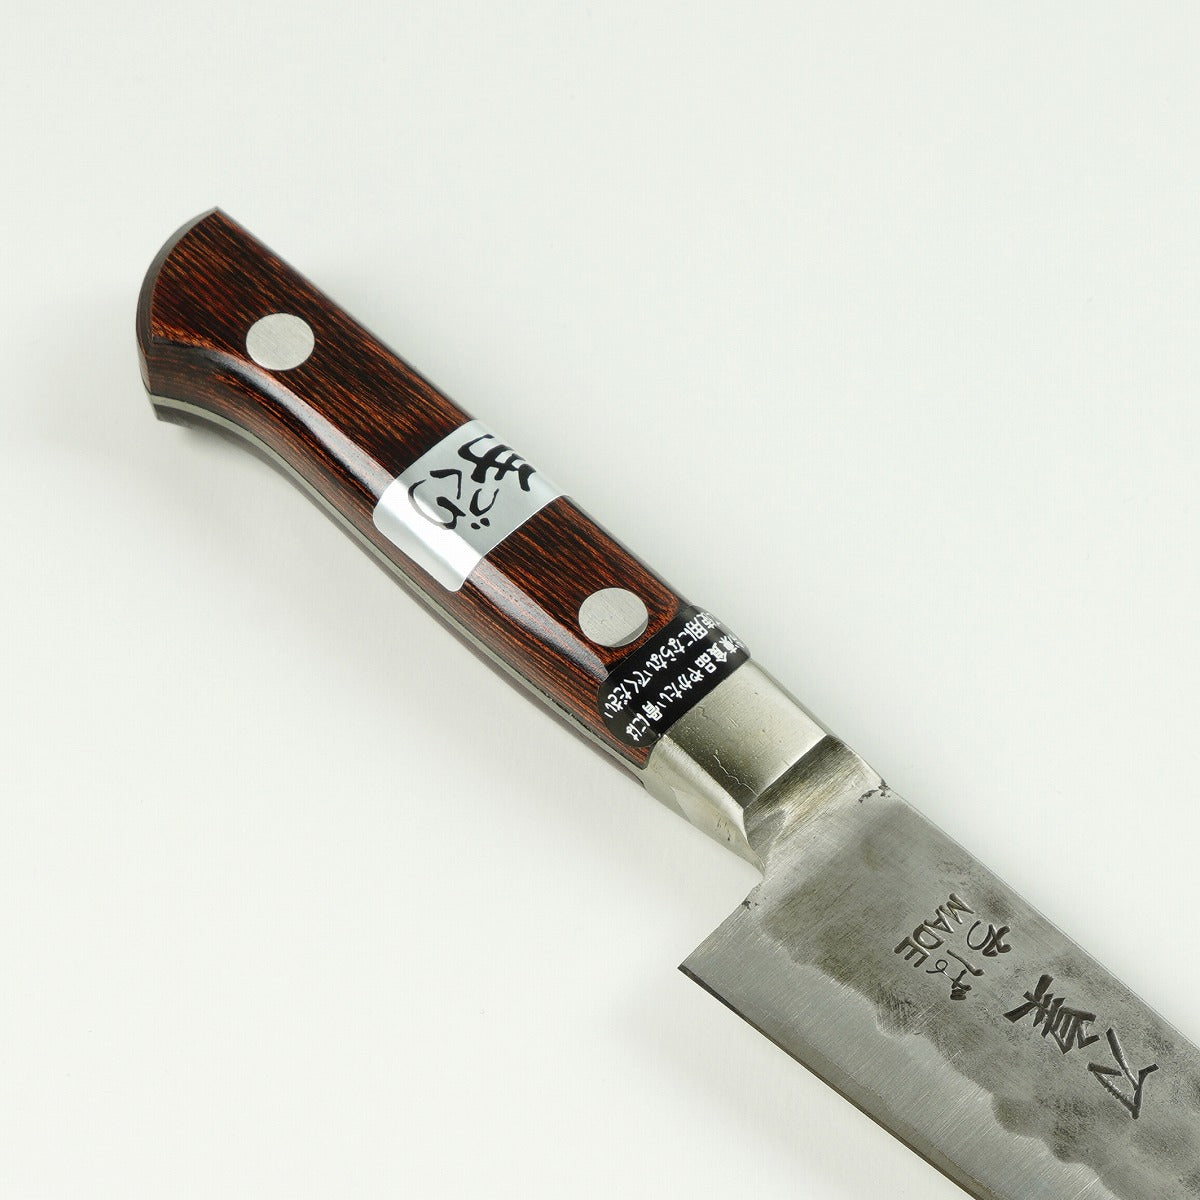 "TOHKO" Petty (Utility Knife) Shirogami No.1,  Nashiji, 150mm